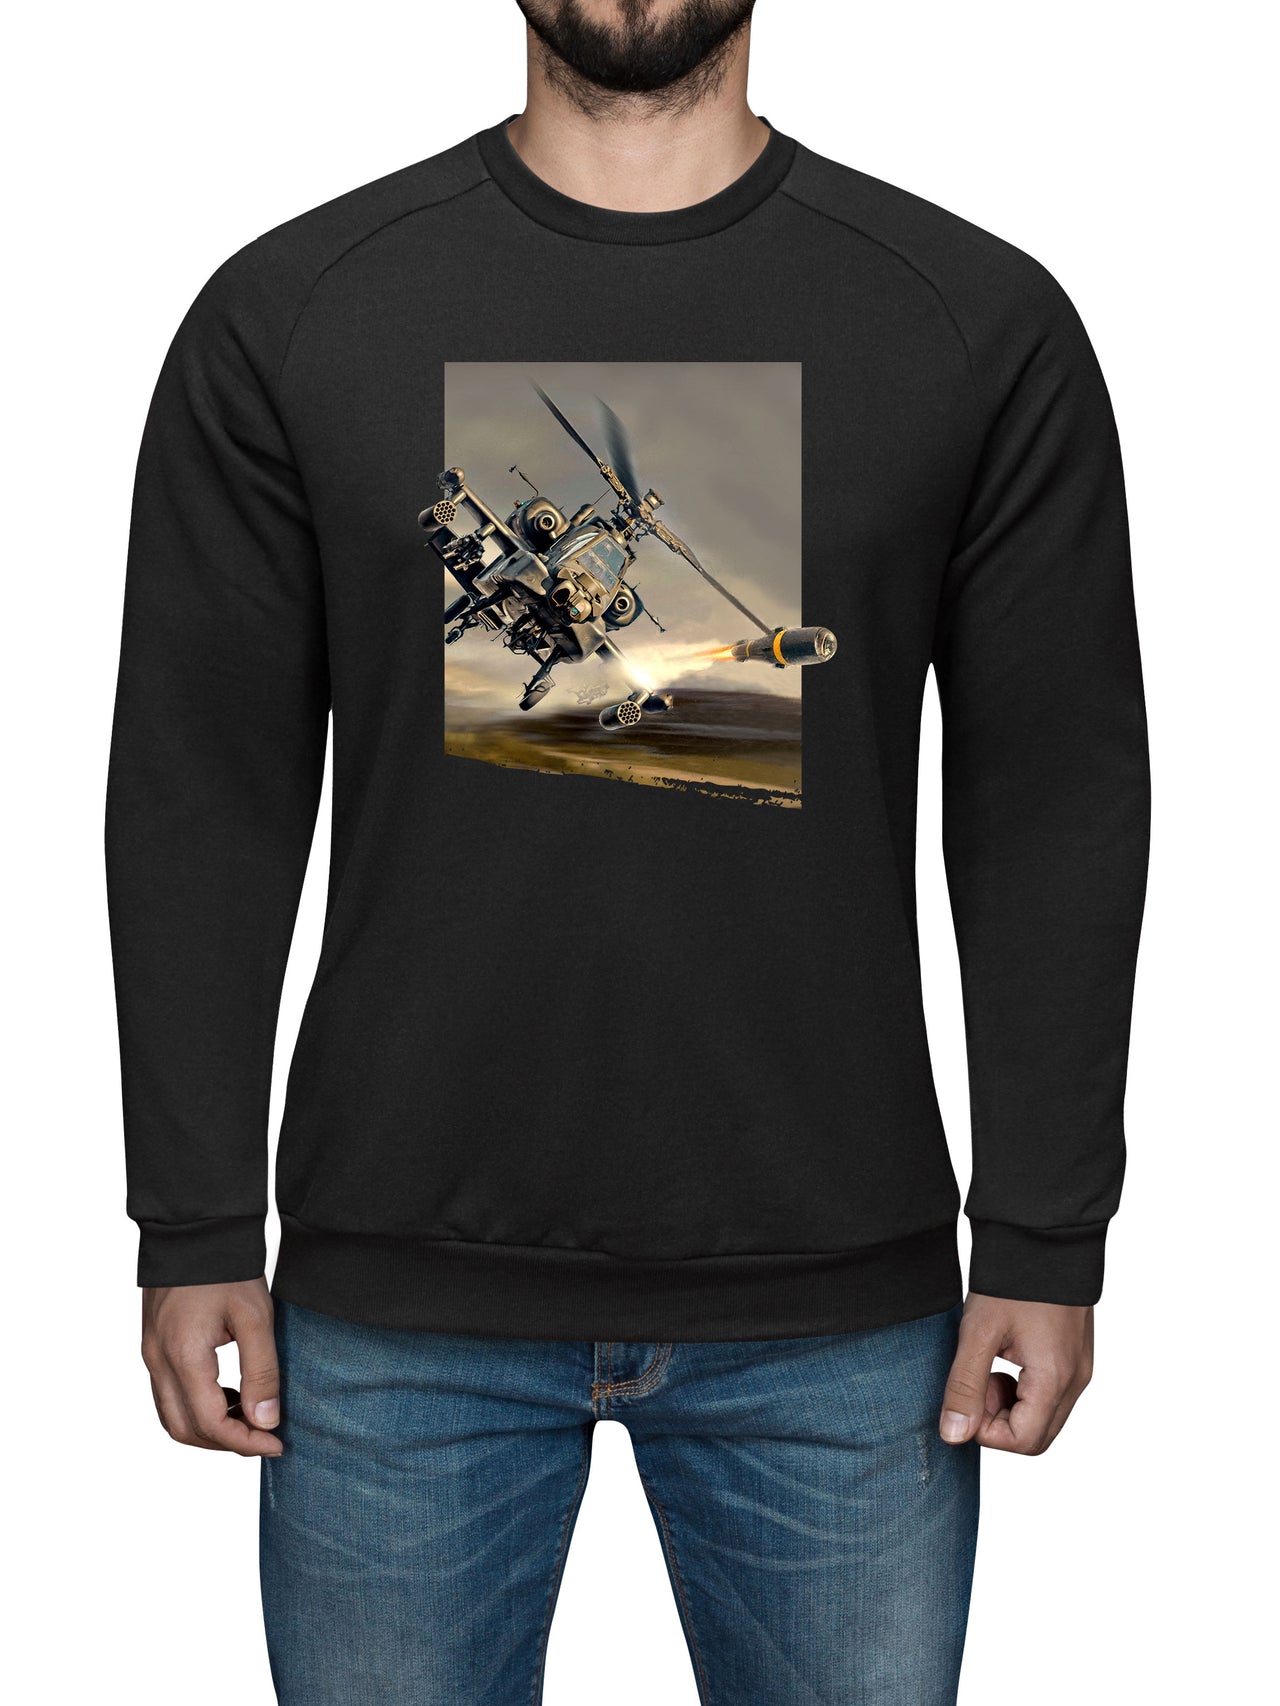 AH-64 Apache - Sweat Shirt